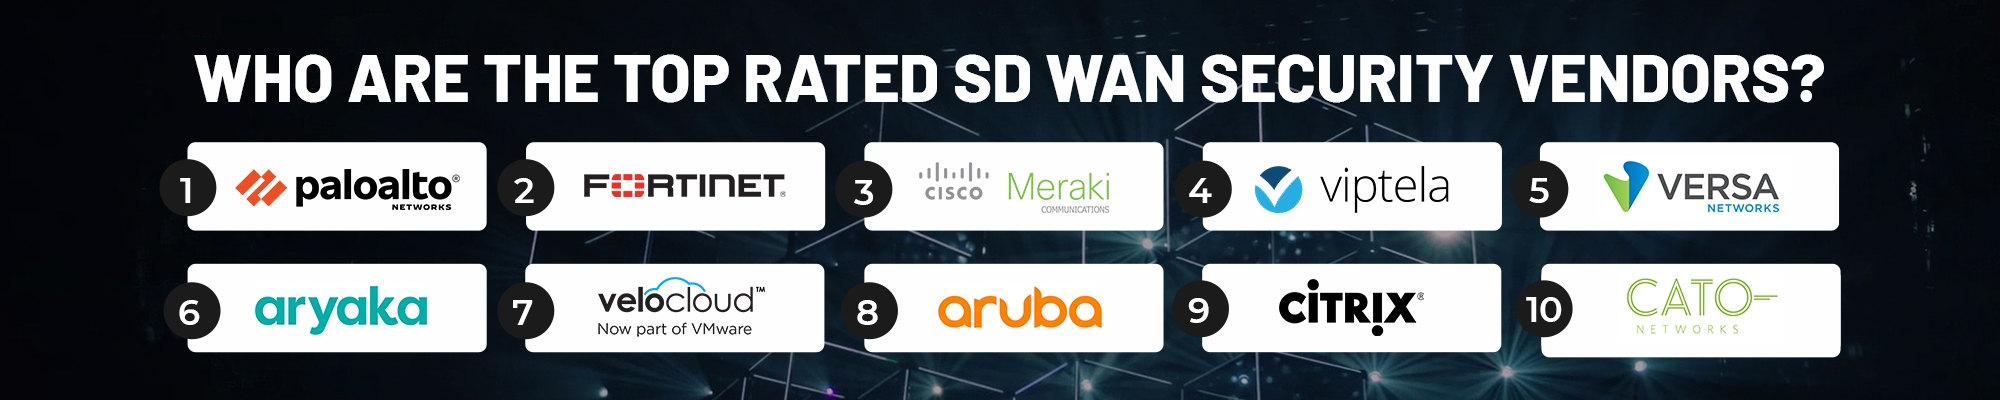 SD WAN Security Vendors Top 10 List